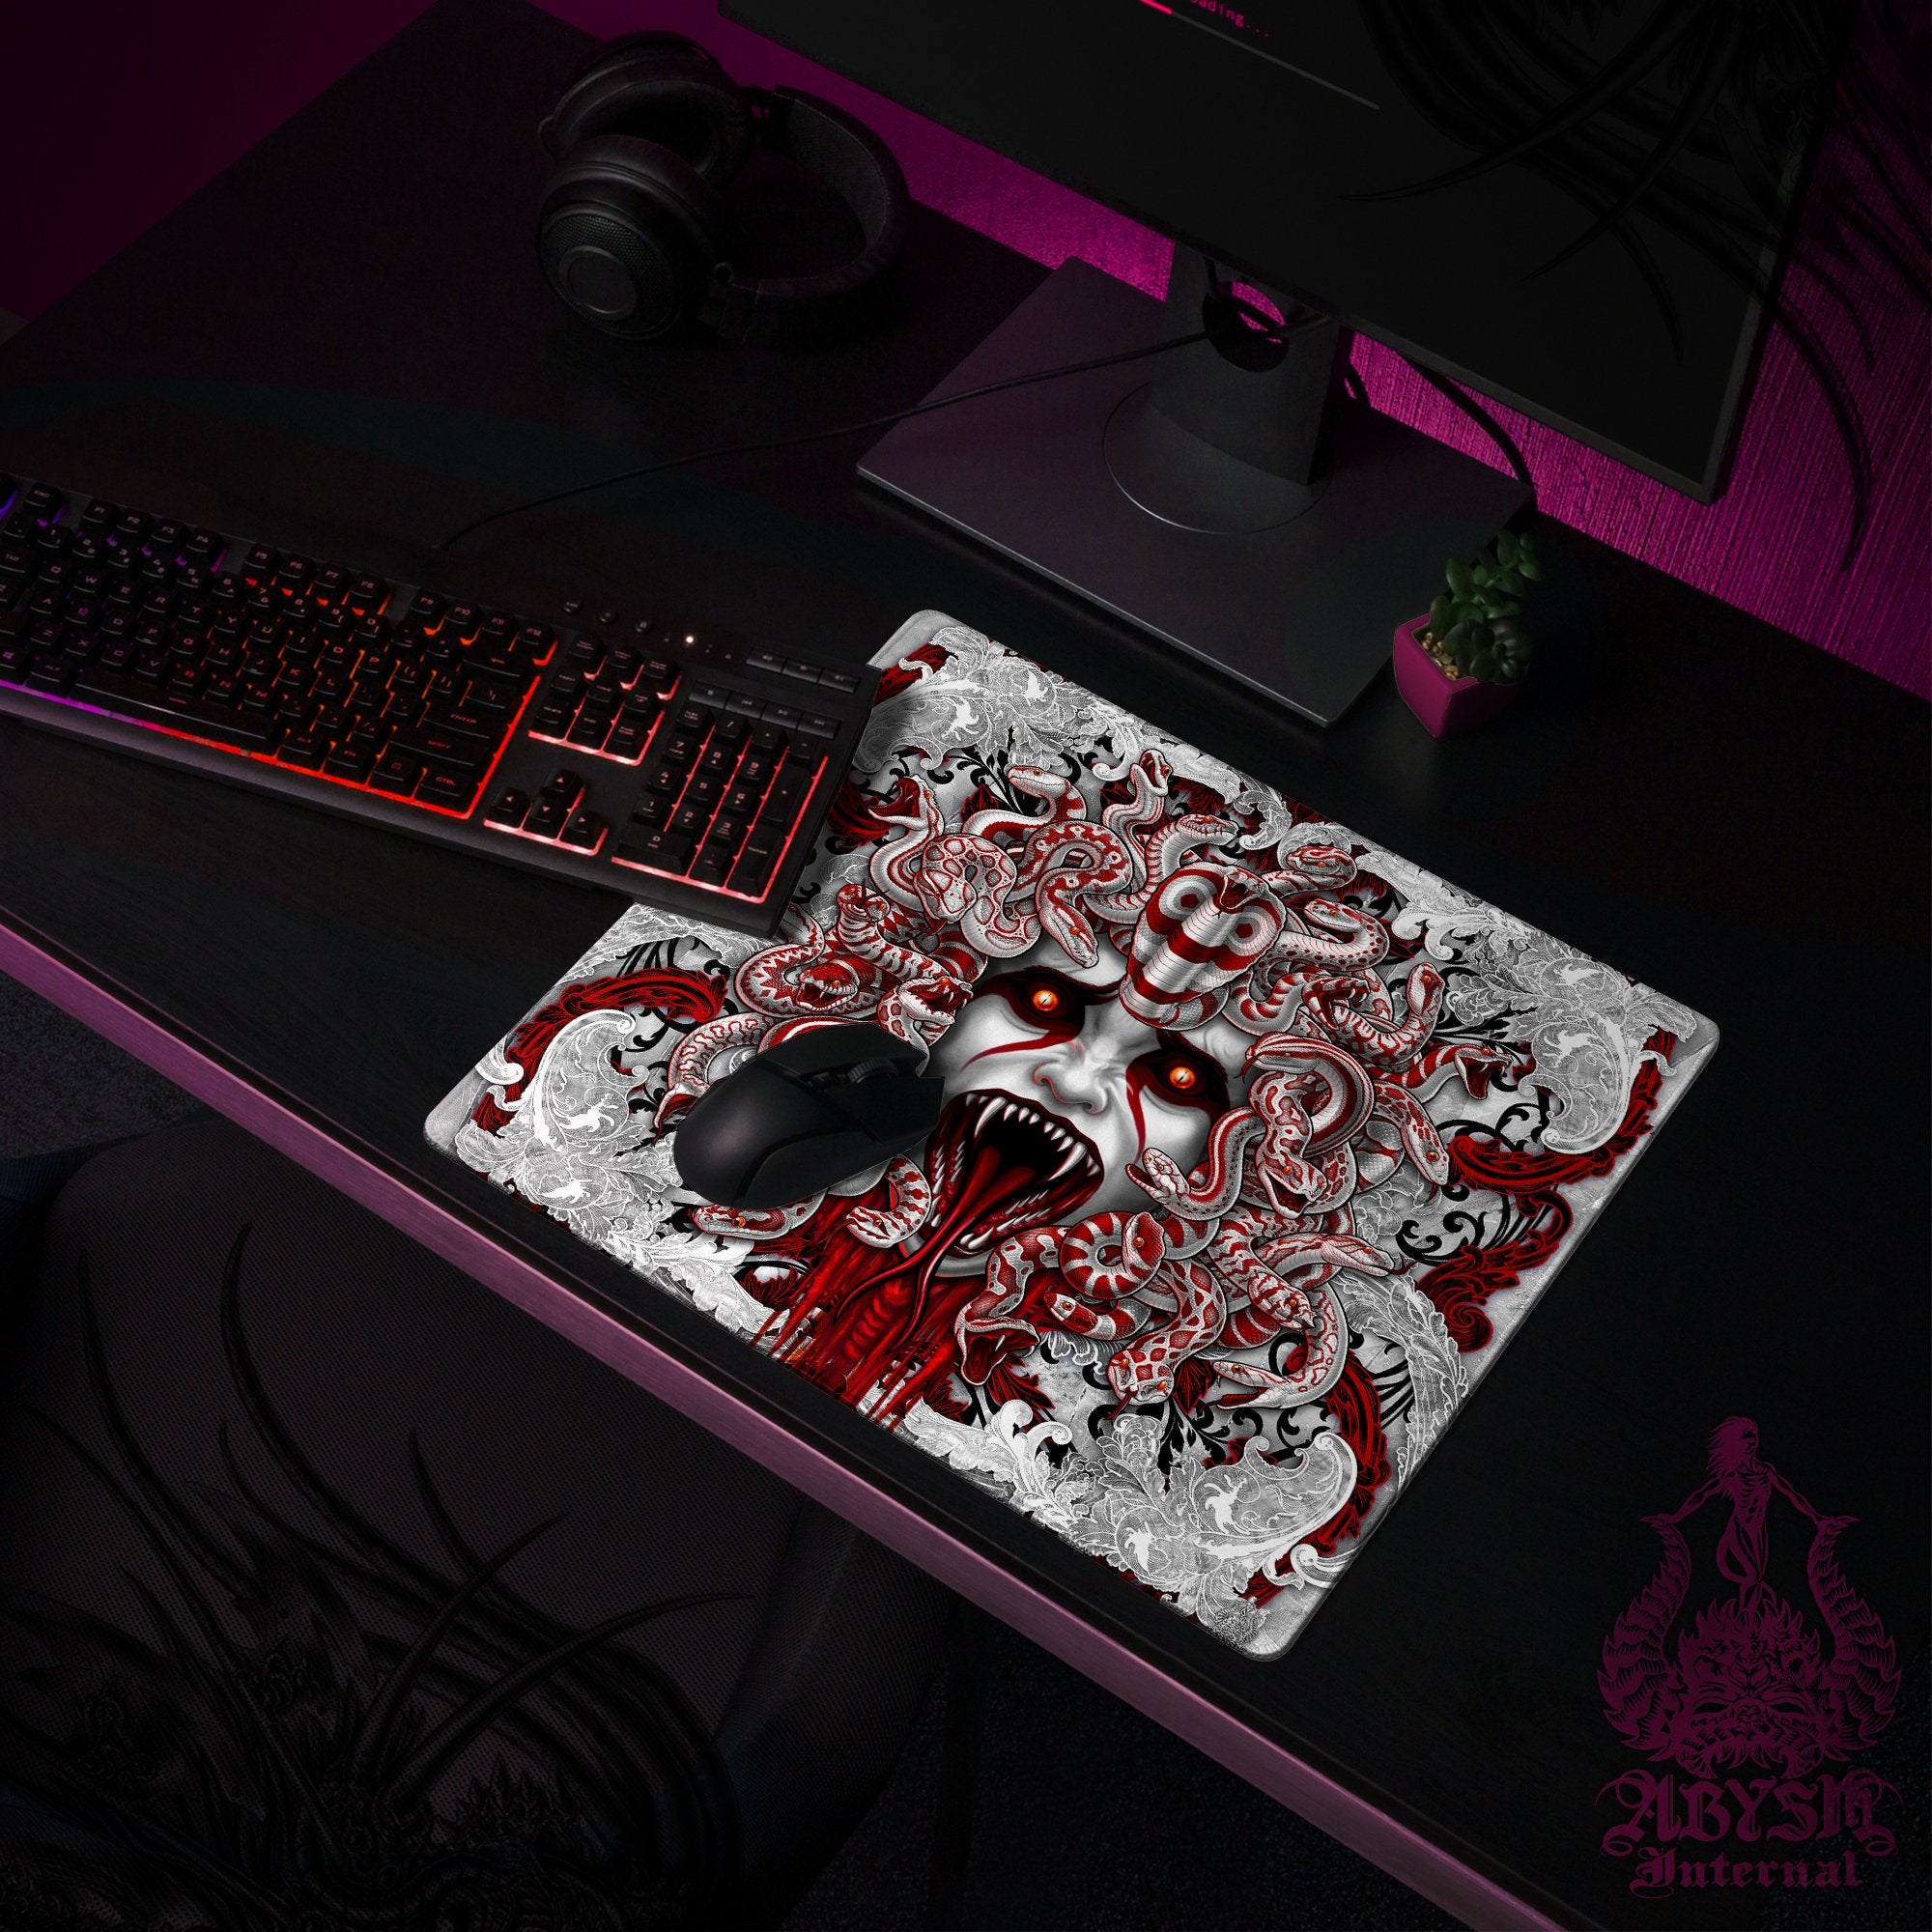 White Goth Mouse Pad, Bloody Skull Gaming Desk Mat, Medusa Workpad, Gamer Table Protector Cover, Dark Fantasy Art Print - 4 Options - Abysm Internal